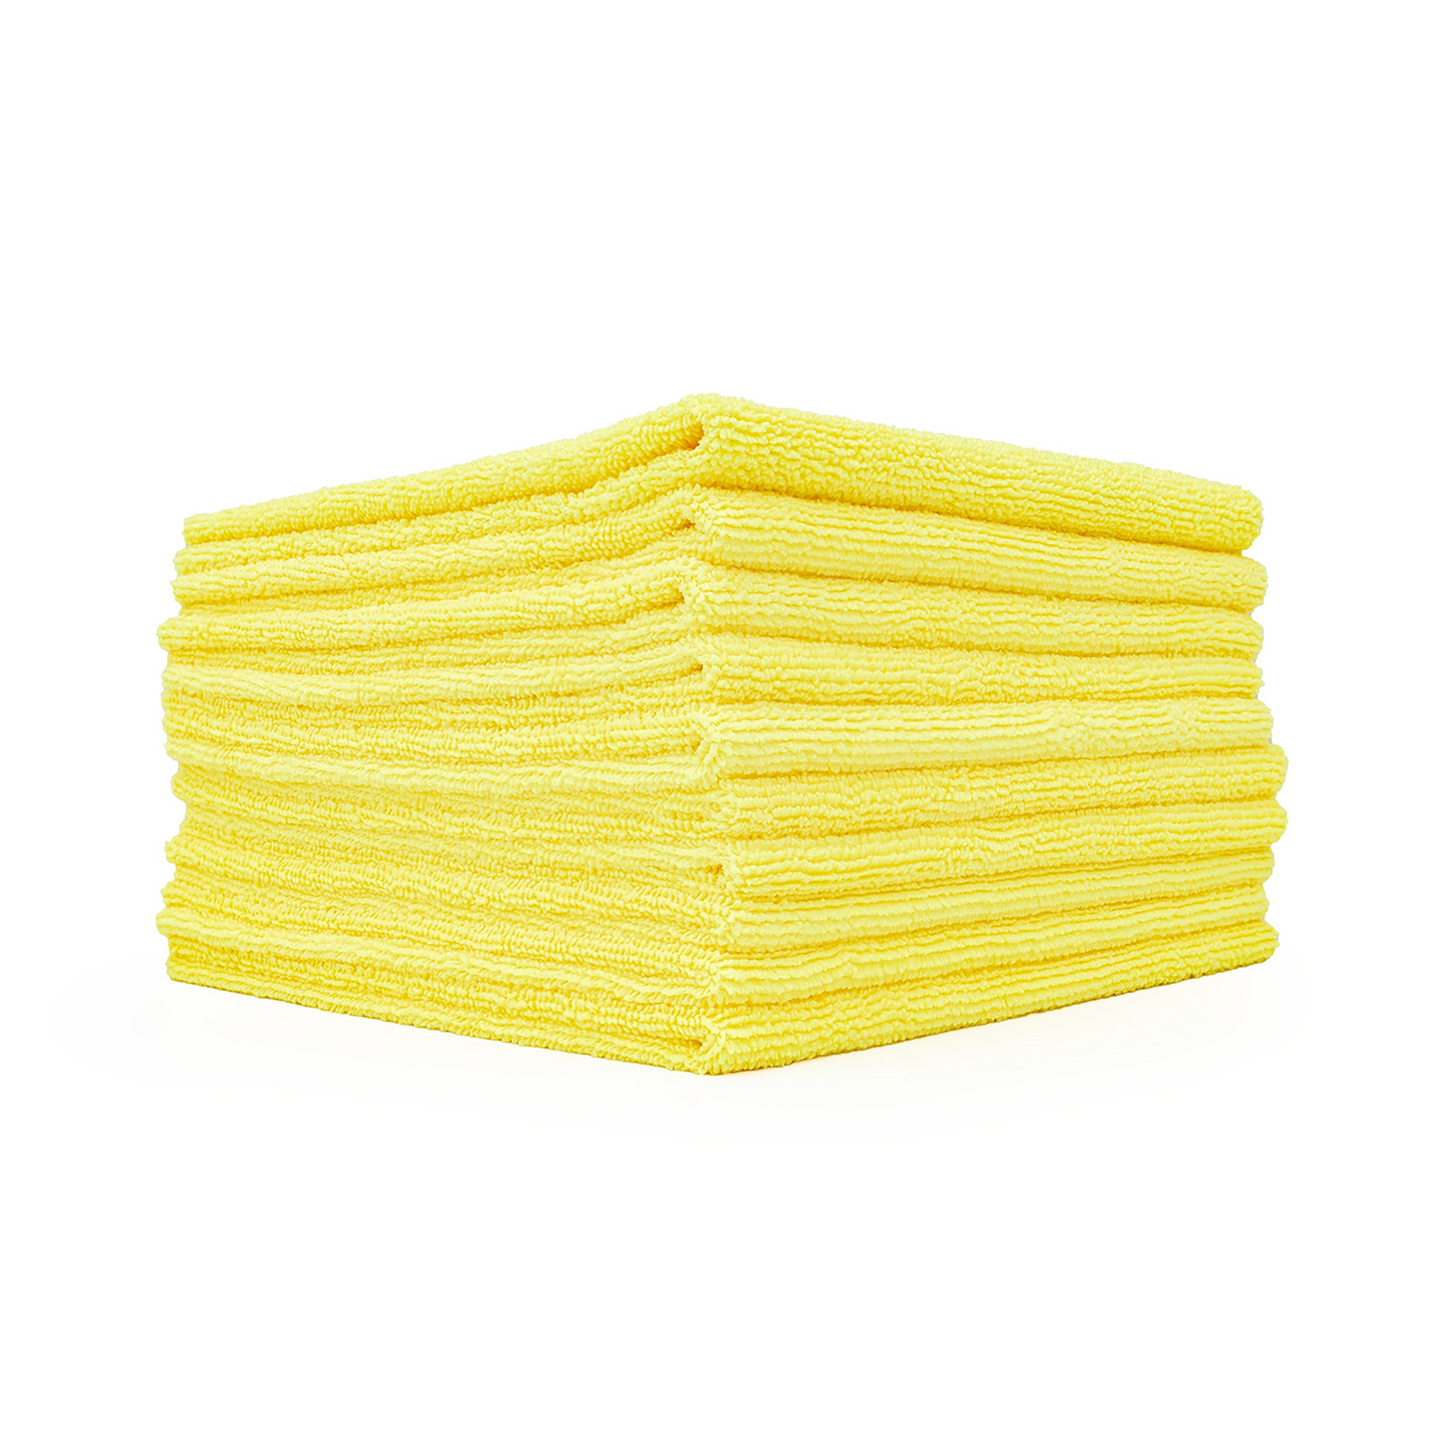 Edgeless 300 Microfiber Towels - 10 Pack